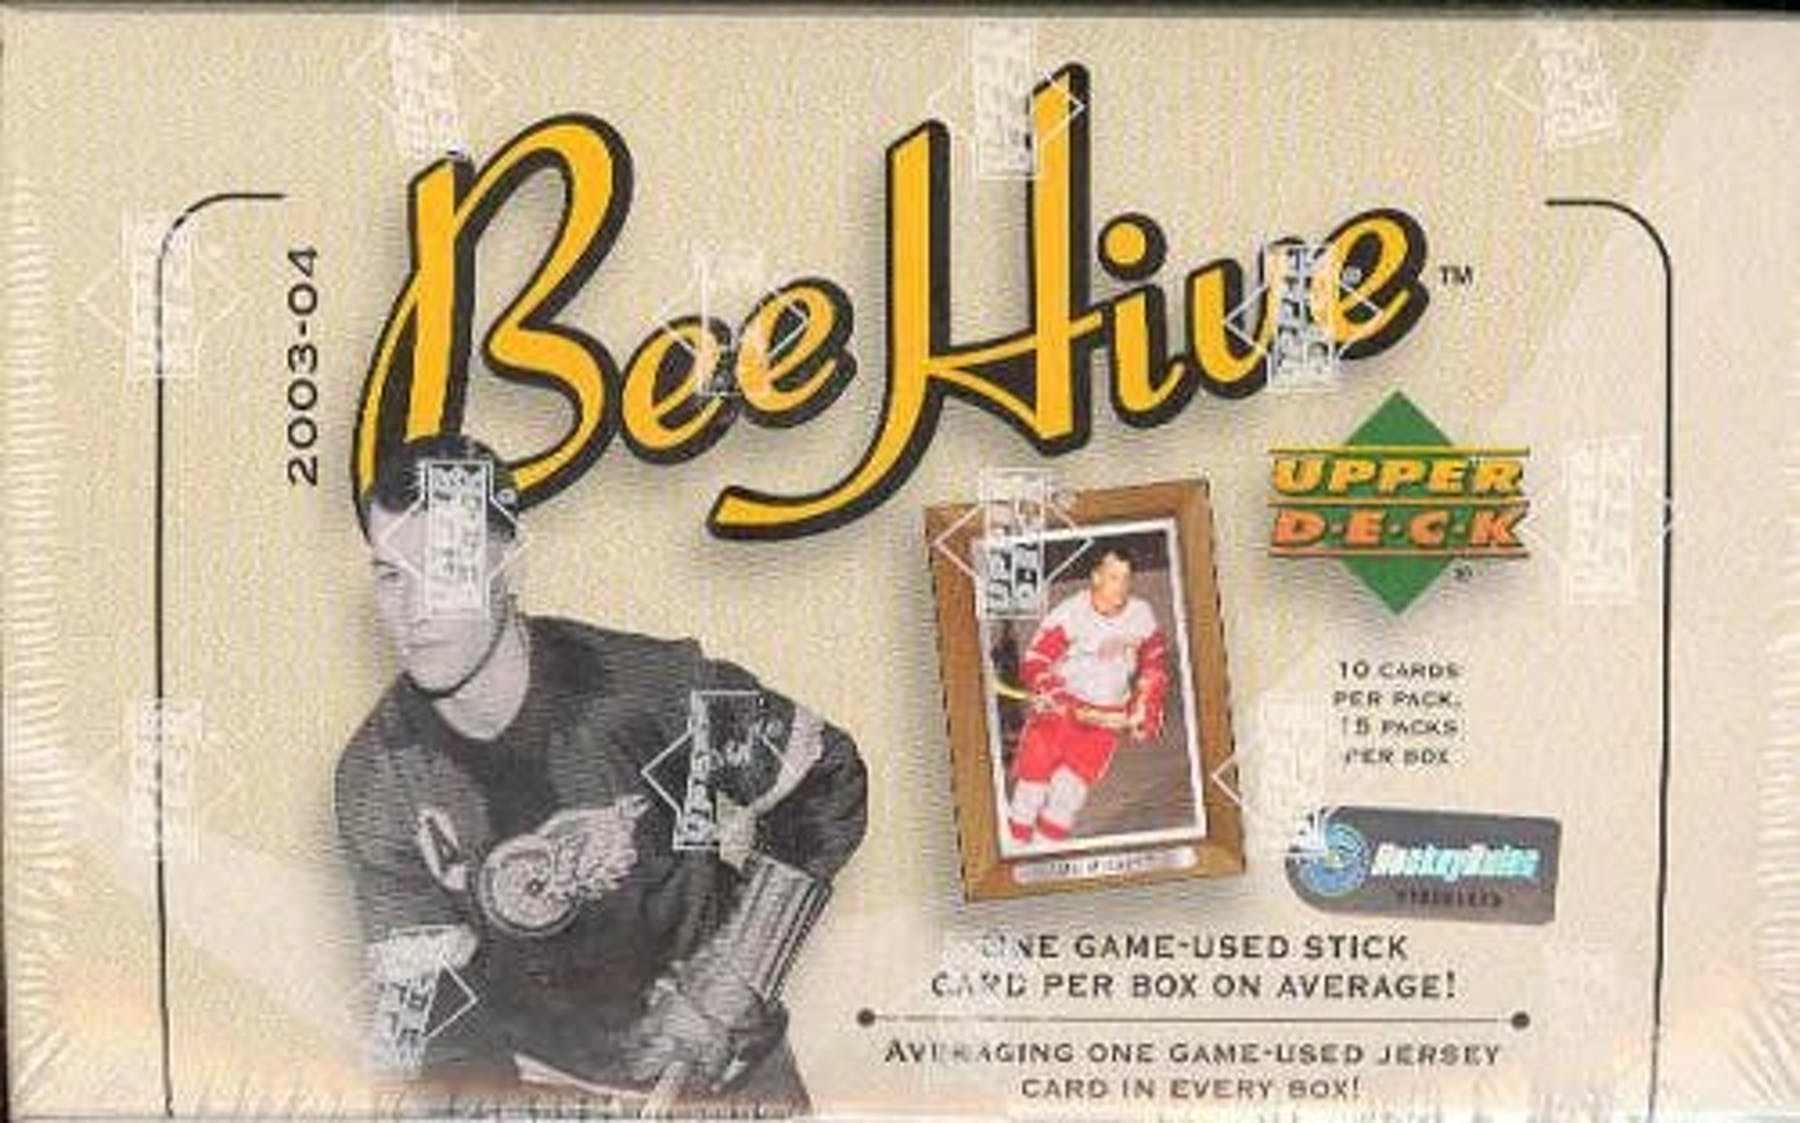 Ed Belfour 2003-04 BeeHive Jersey card JT-24